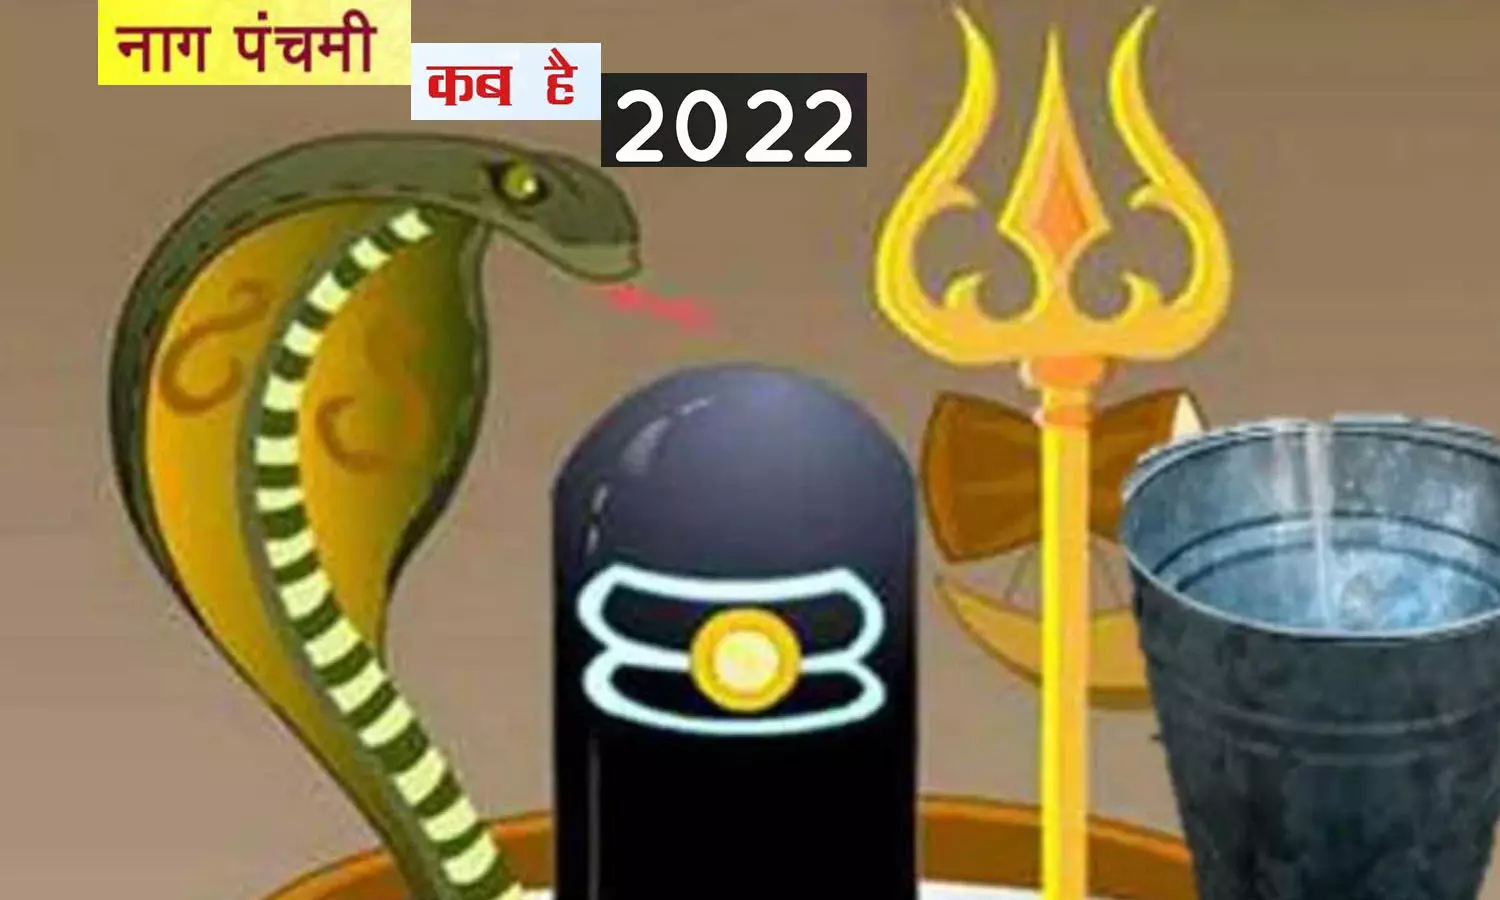 Nag Panchami 2022 Kab Hai